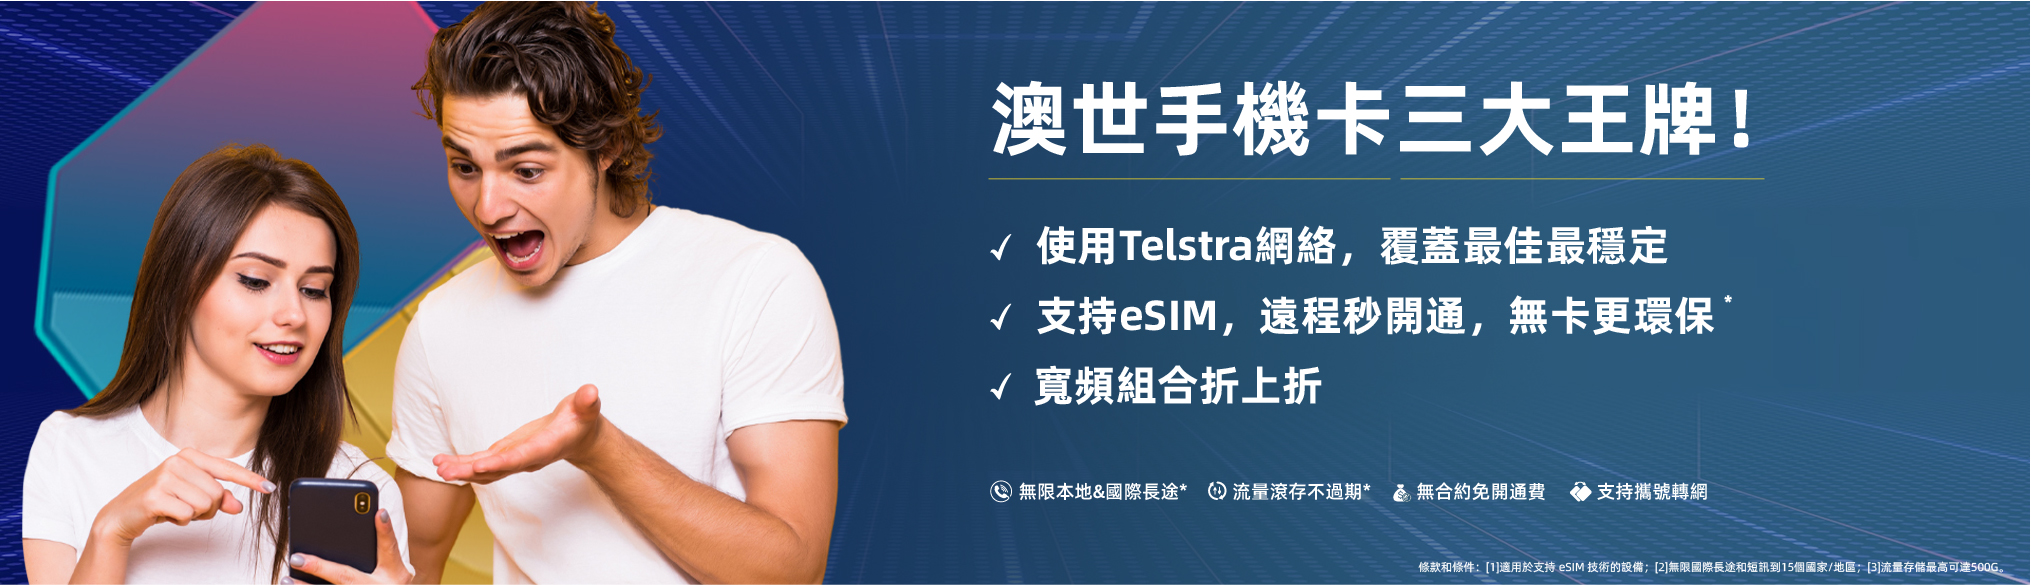 eSIM Telstra網絡 最佳最穩定 組合套餐折上折 澳世網絡